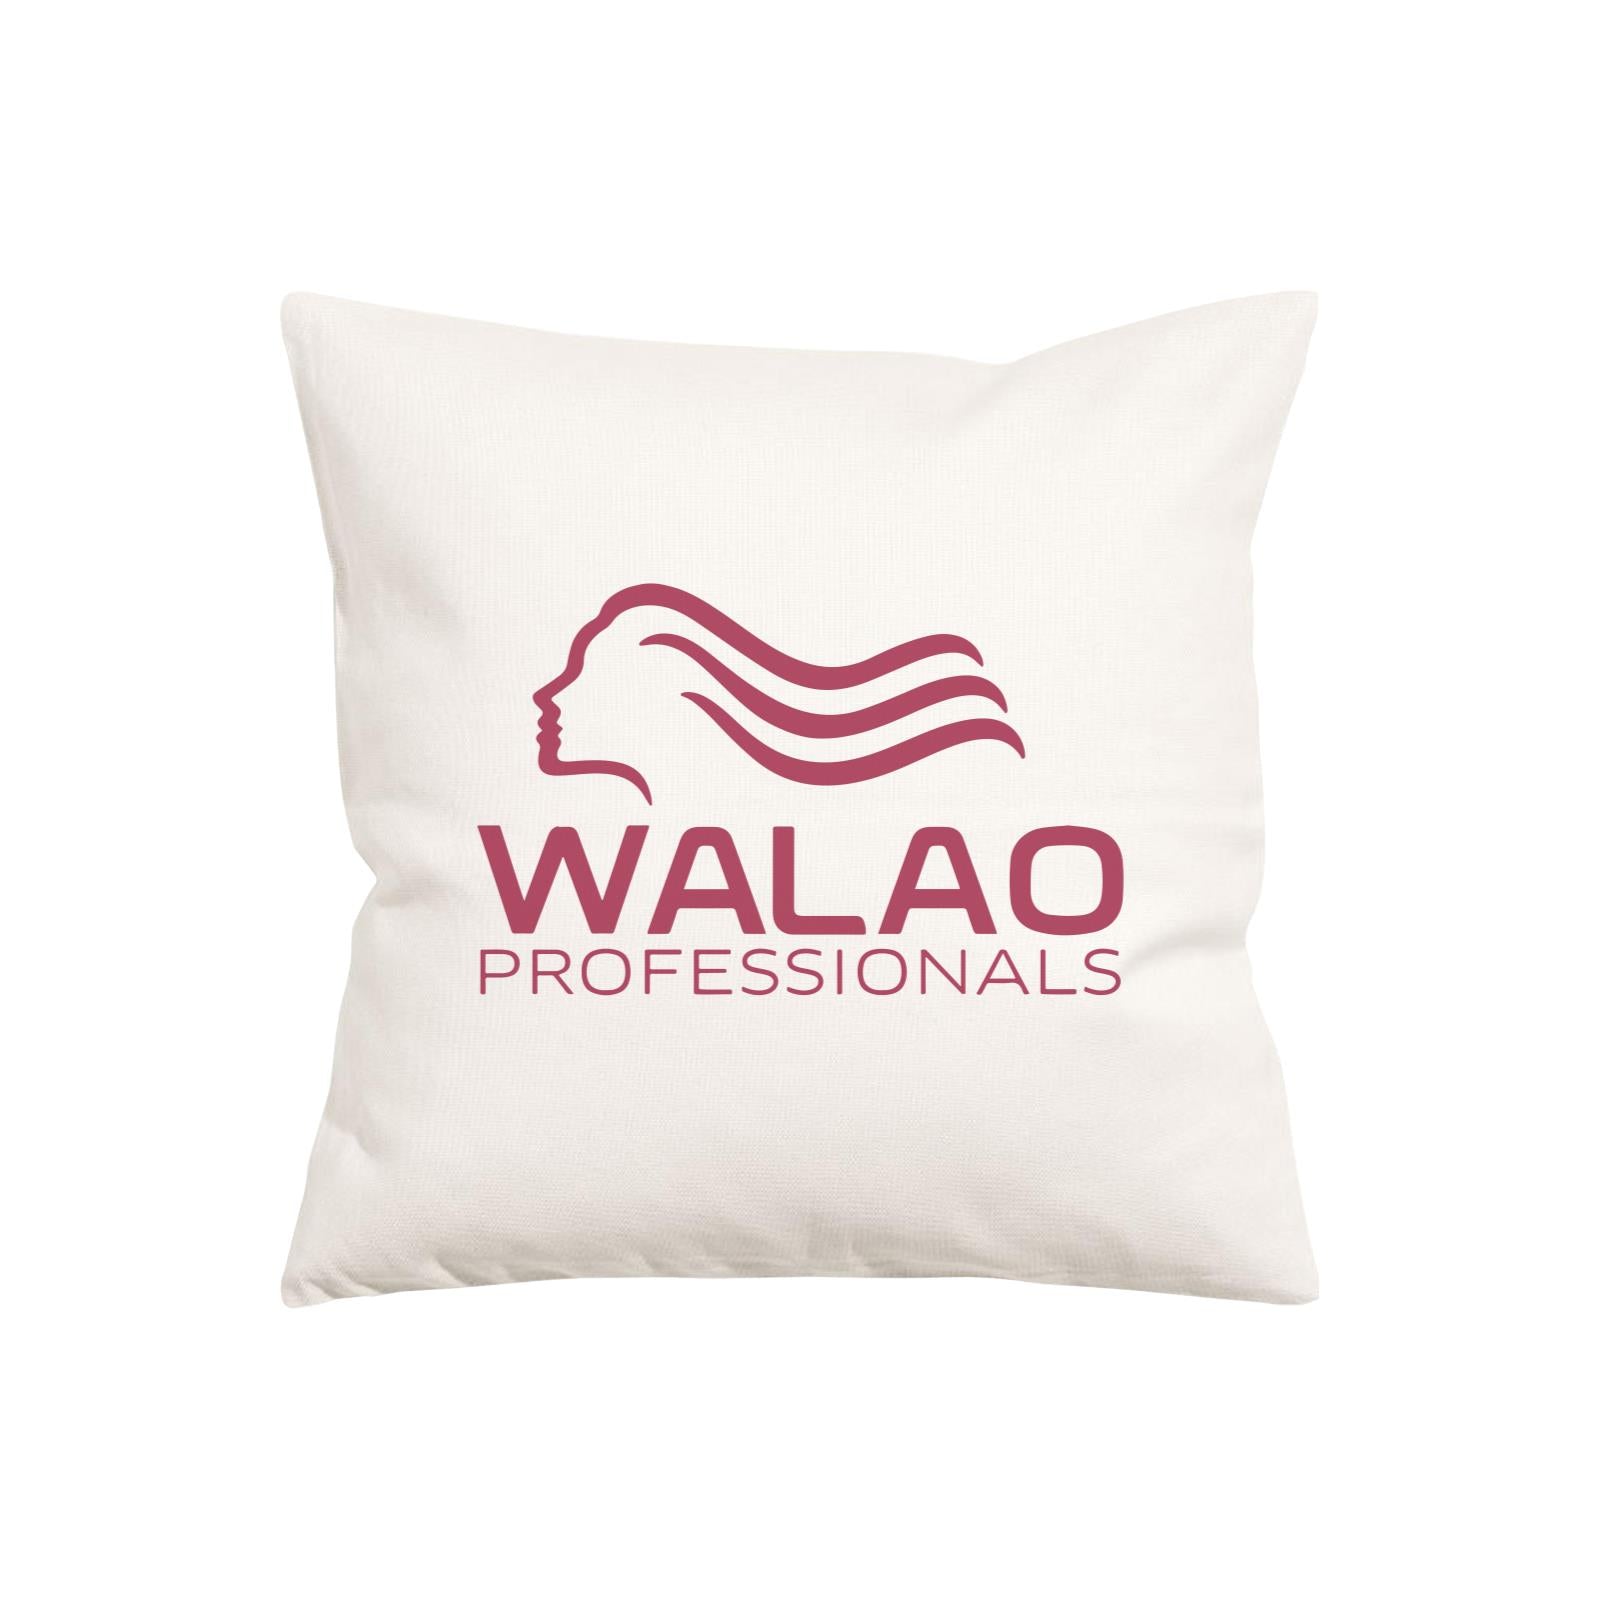 Slang Statement Walao Professional Pillow Cushion